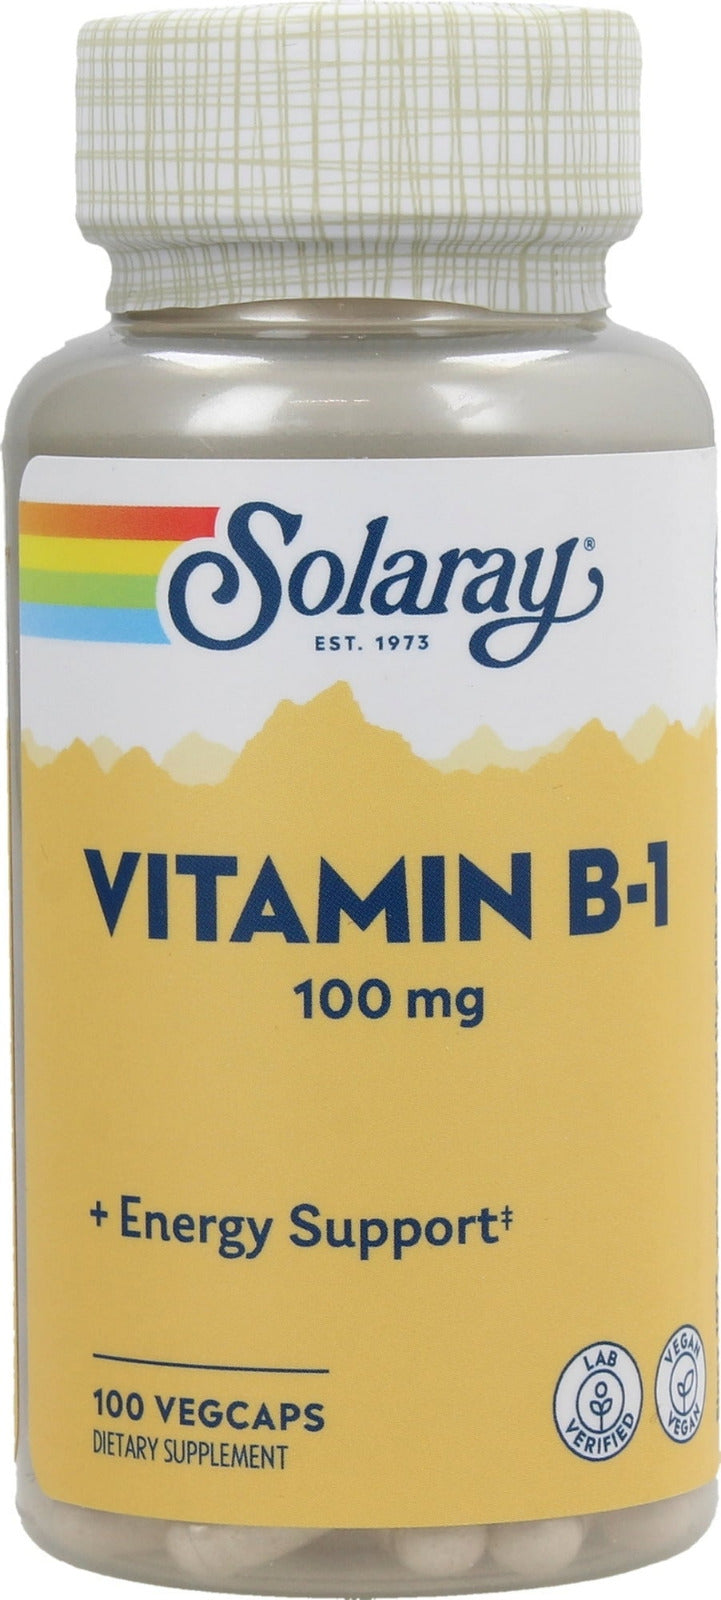 Solaray Vitamin B-1 - The Food Balance